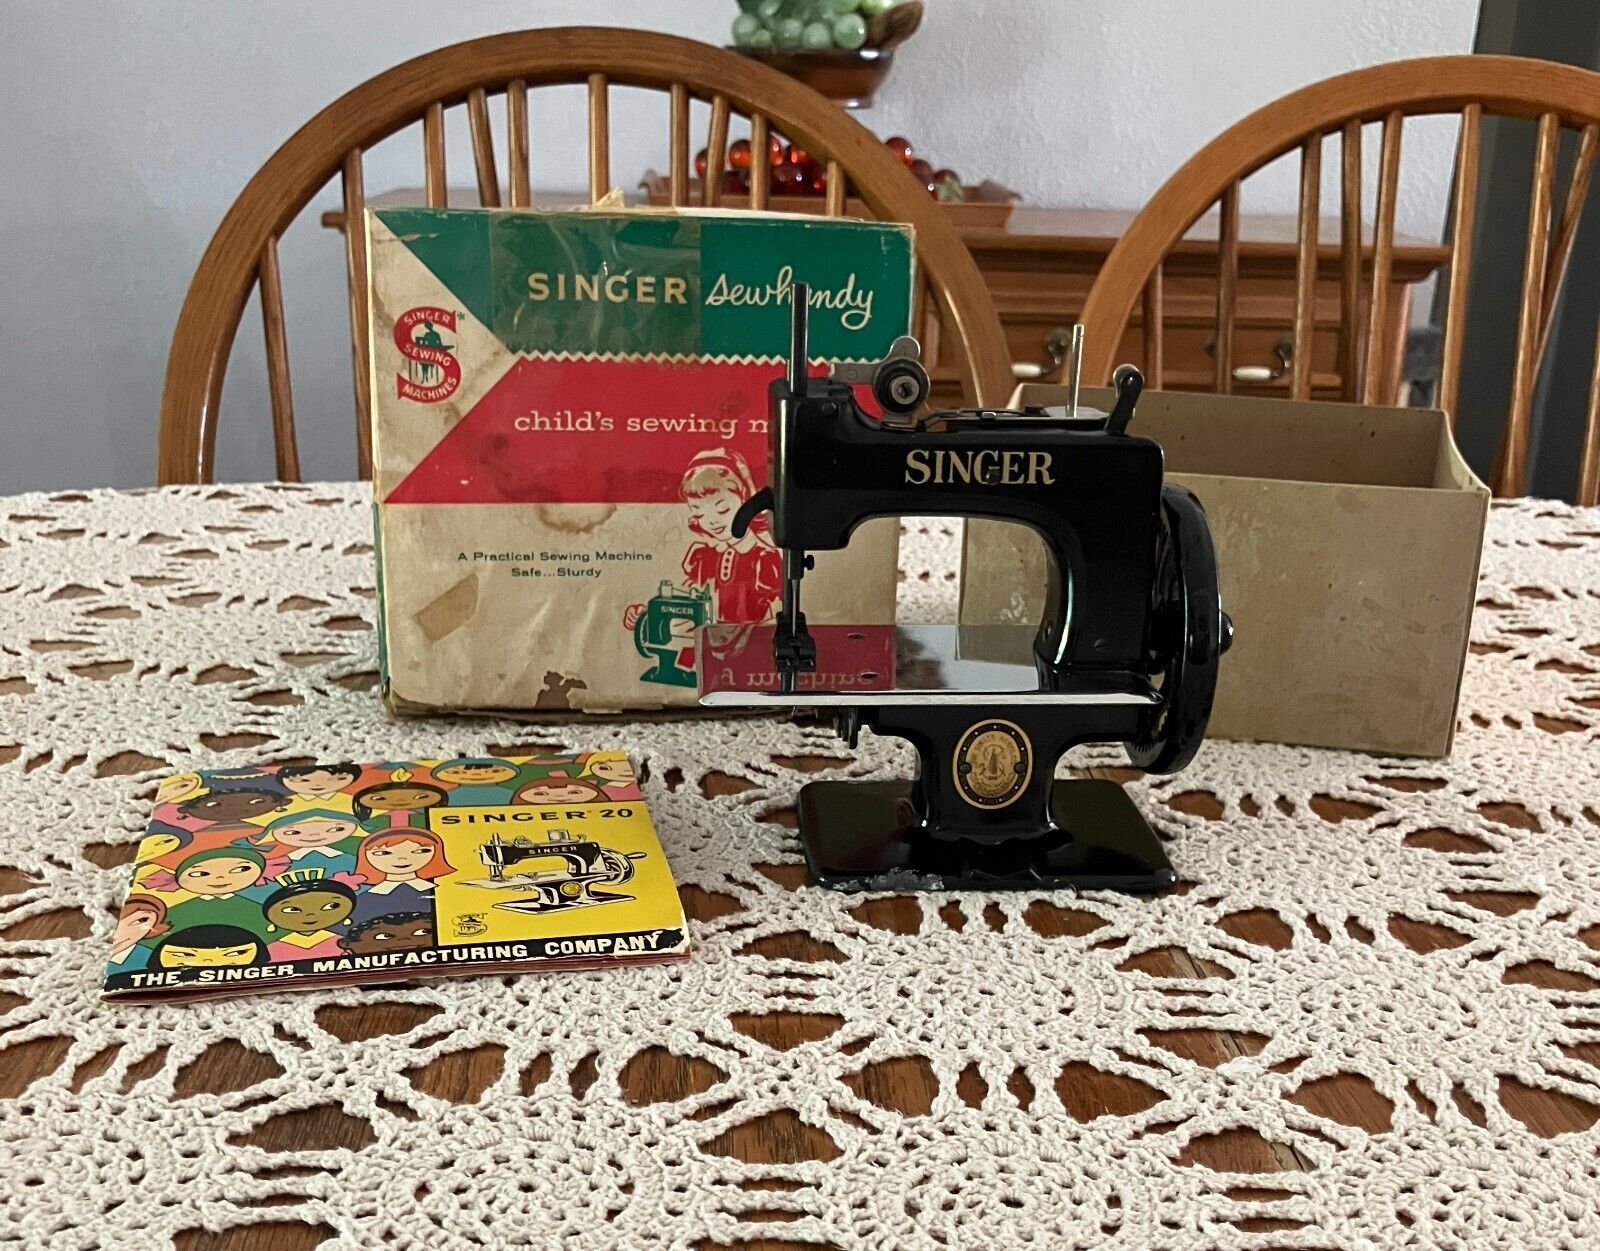 Vintage 1955 Singer Sewhandy Child’s Sewing Machine Model No. 20 Original Box